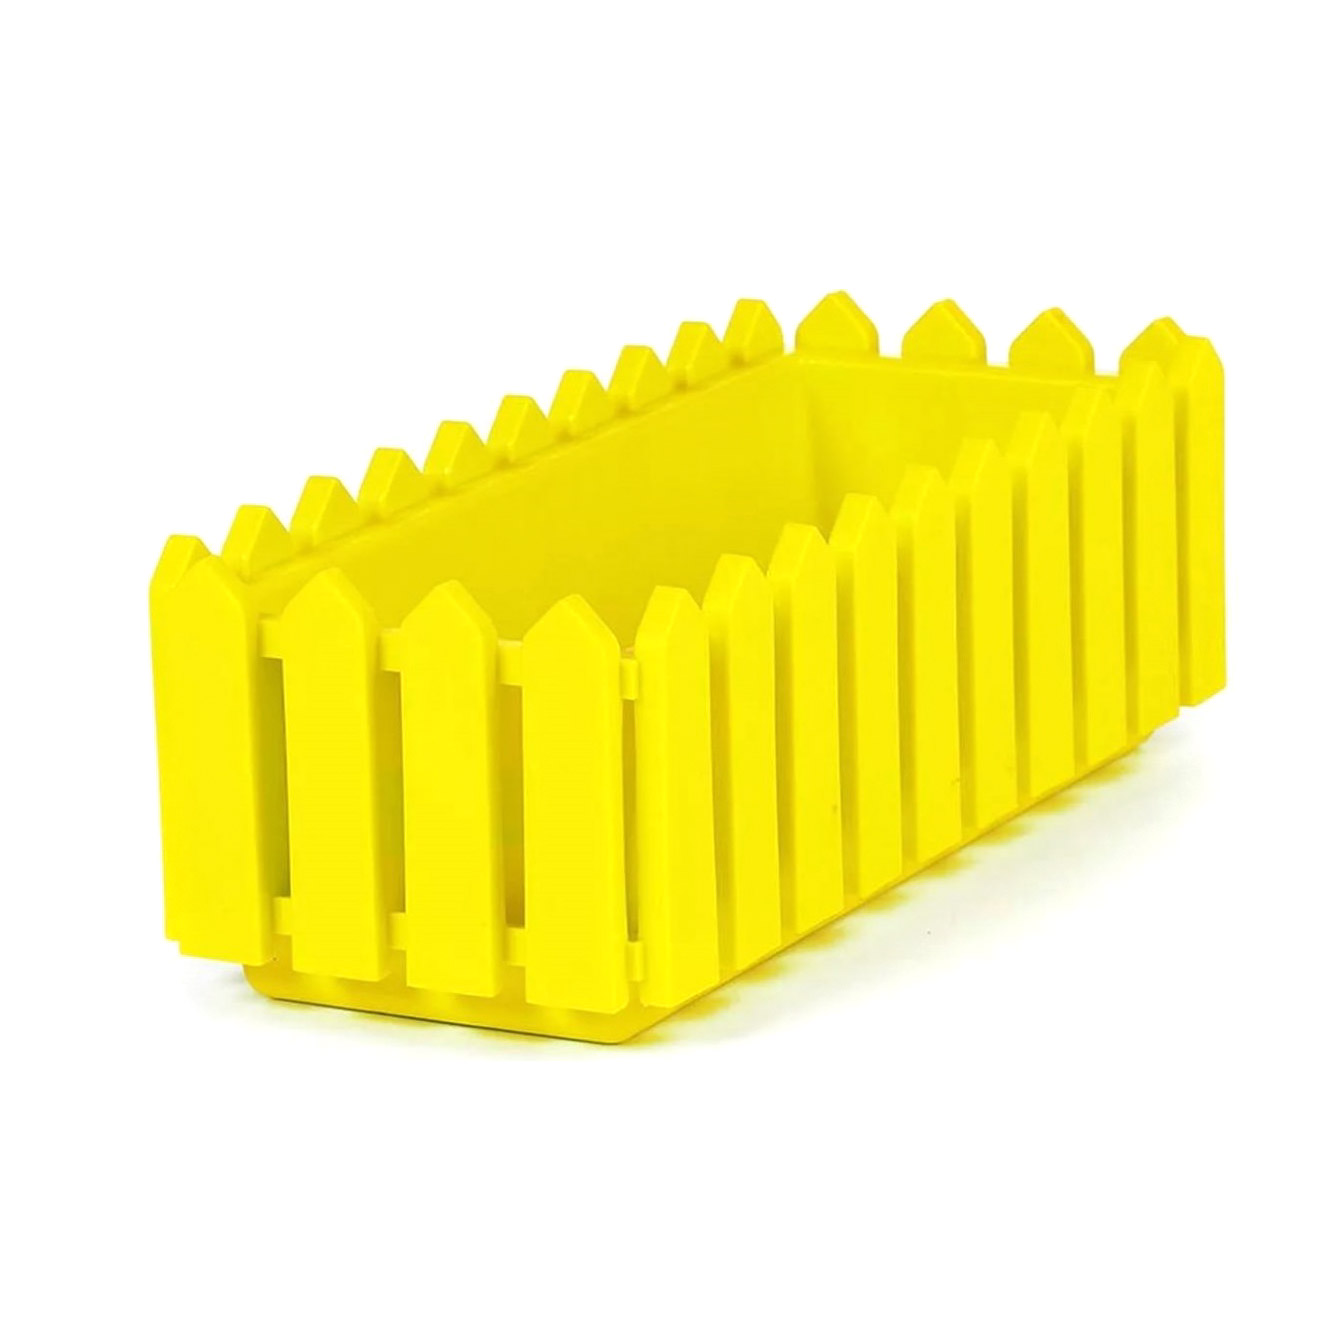 фото Ящик элластик-пласт лардо с поддоном желтый 47х19.2х16 см элластик пласт